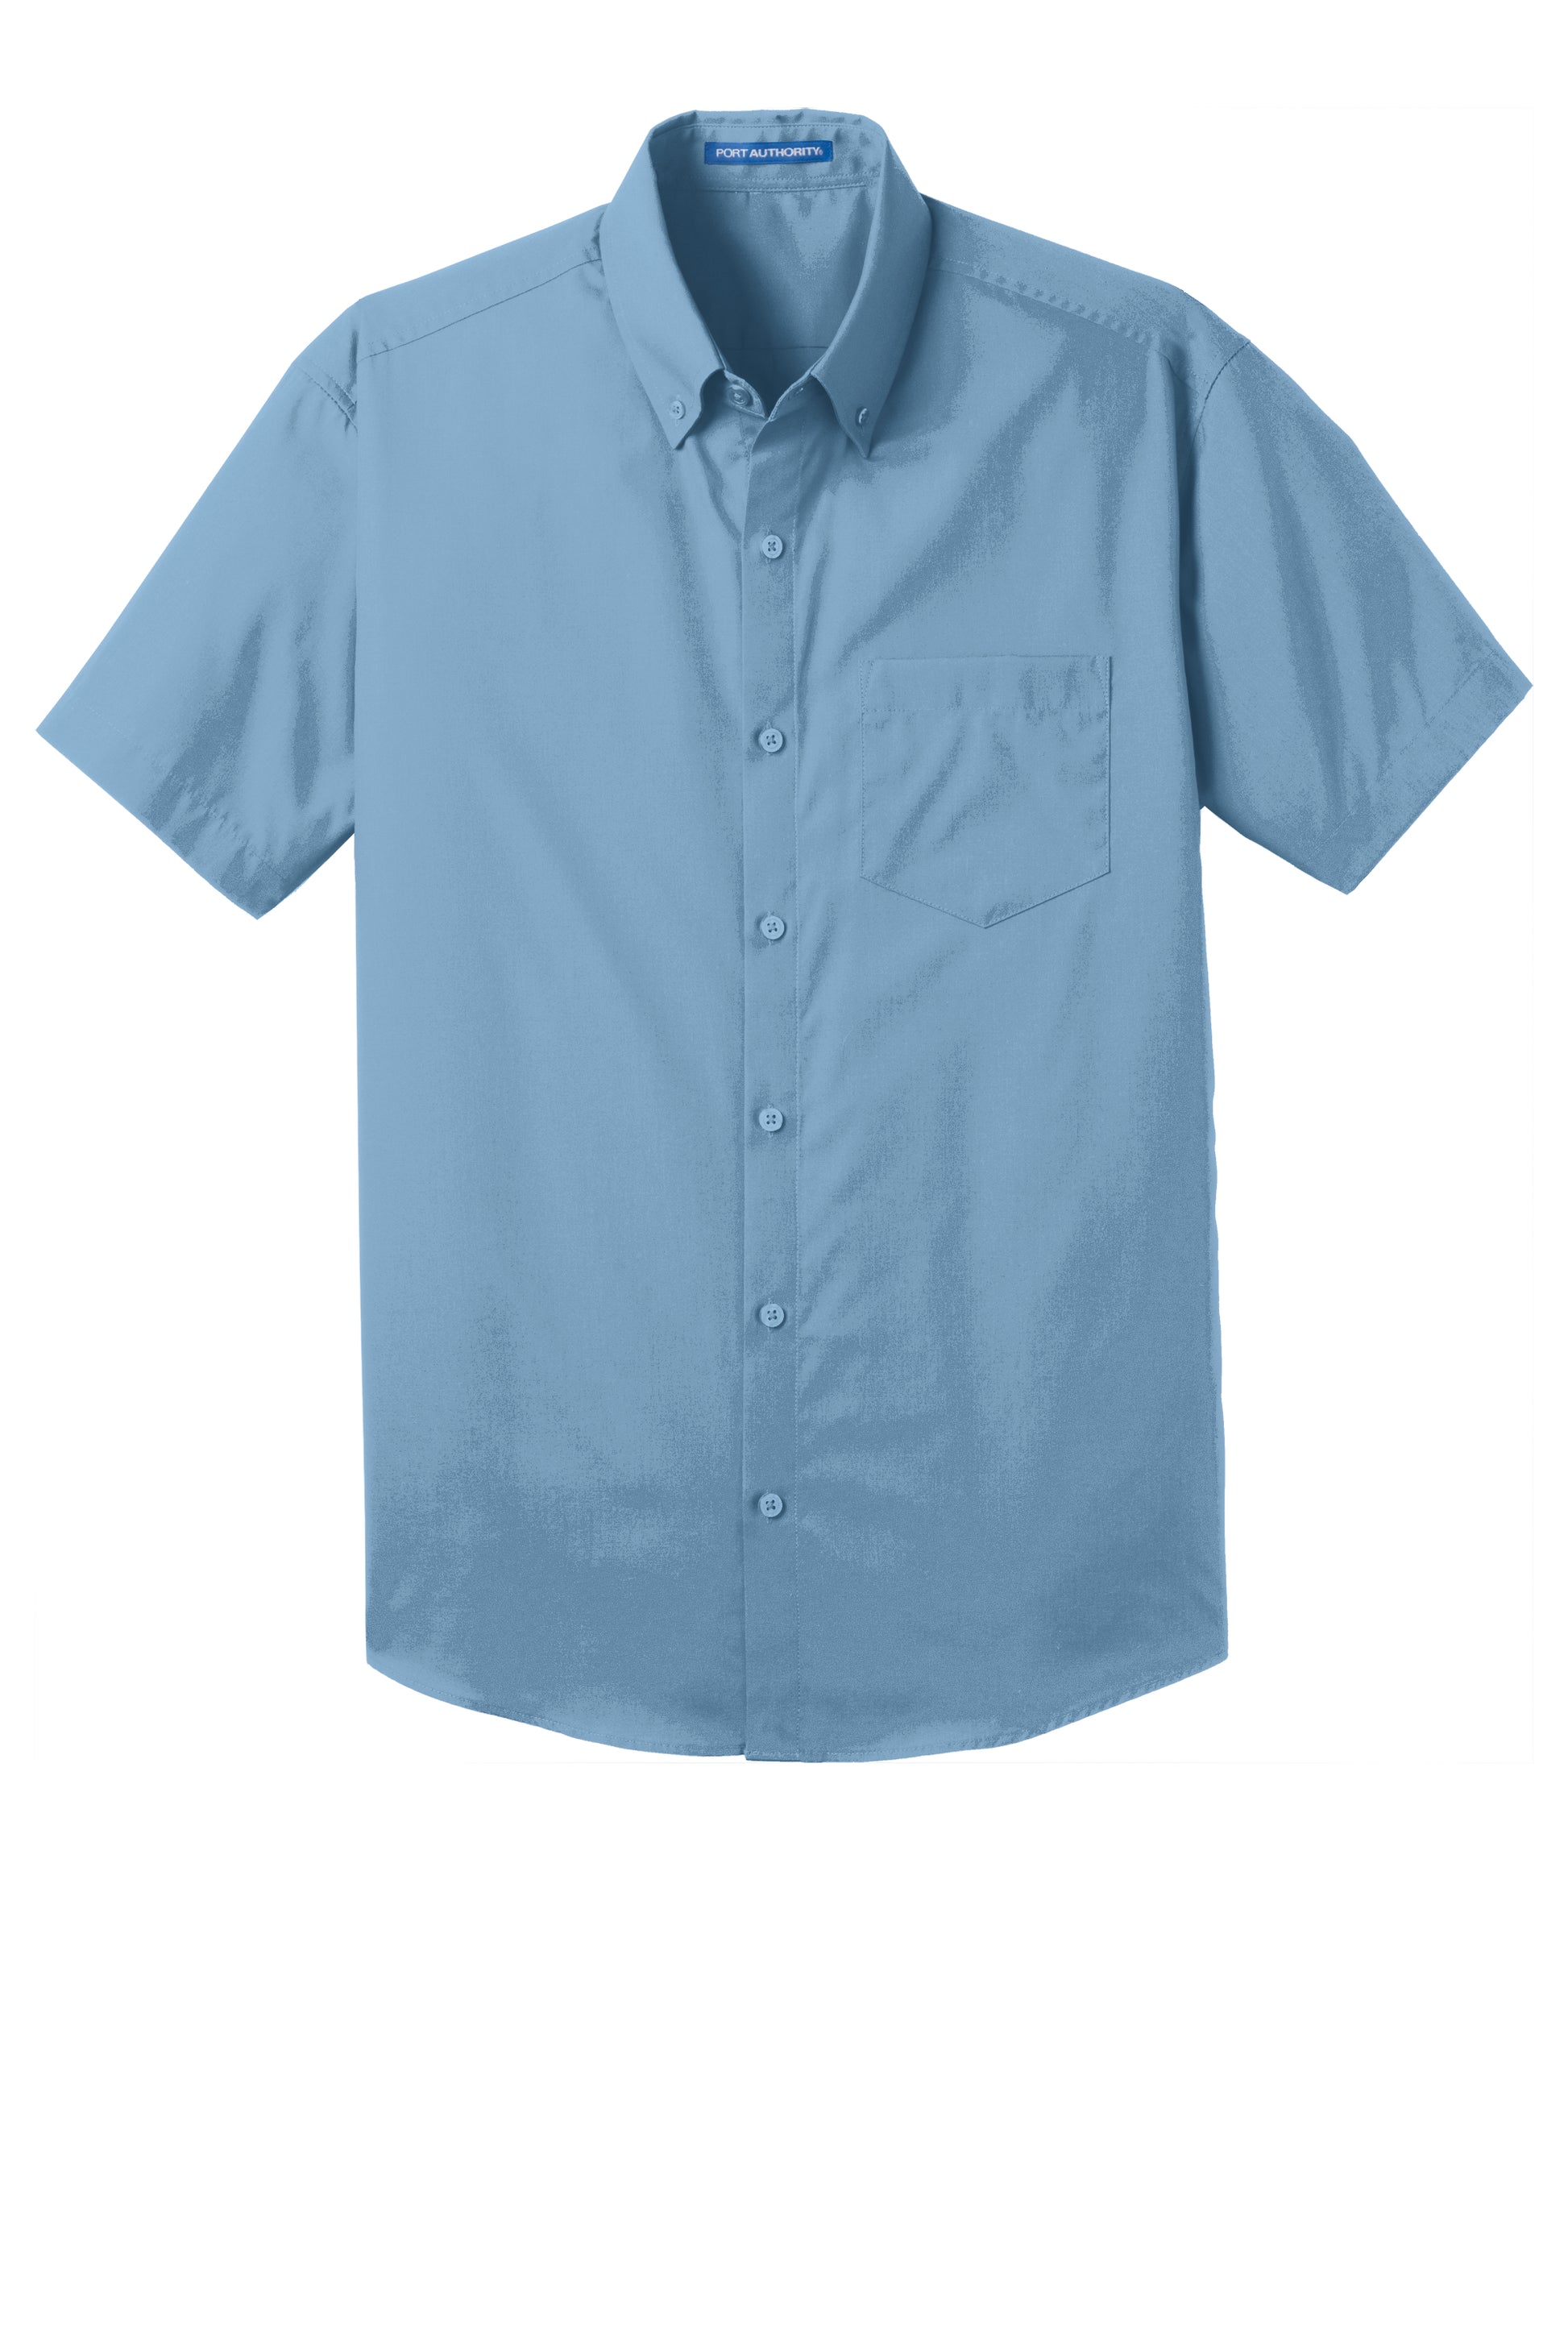 port authority carefree poplin shirt carolina blue